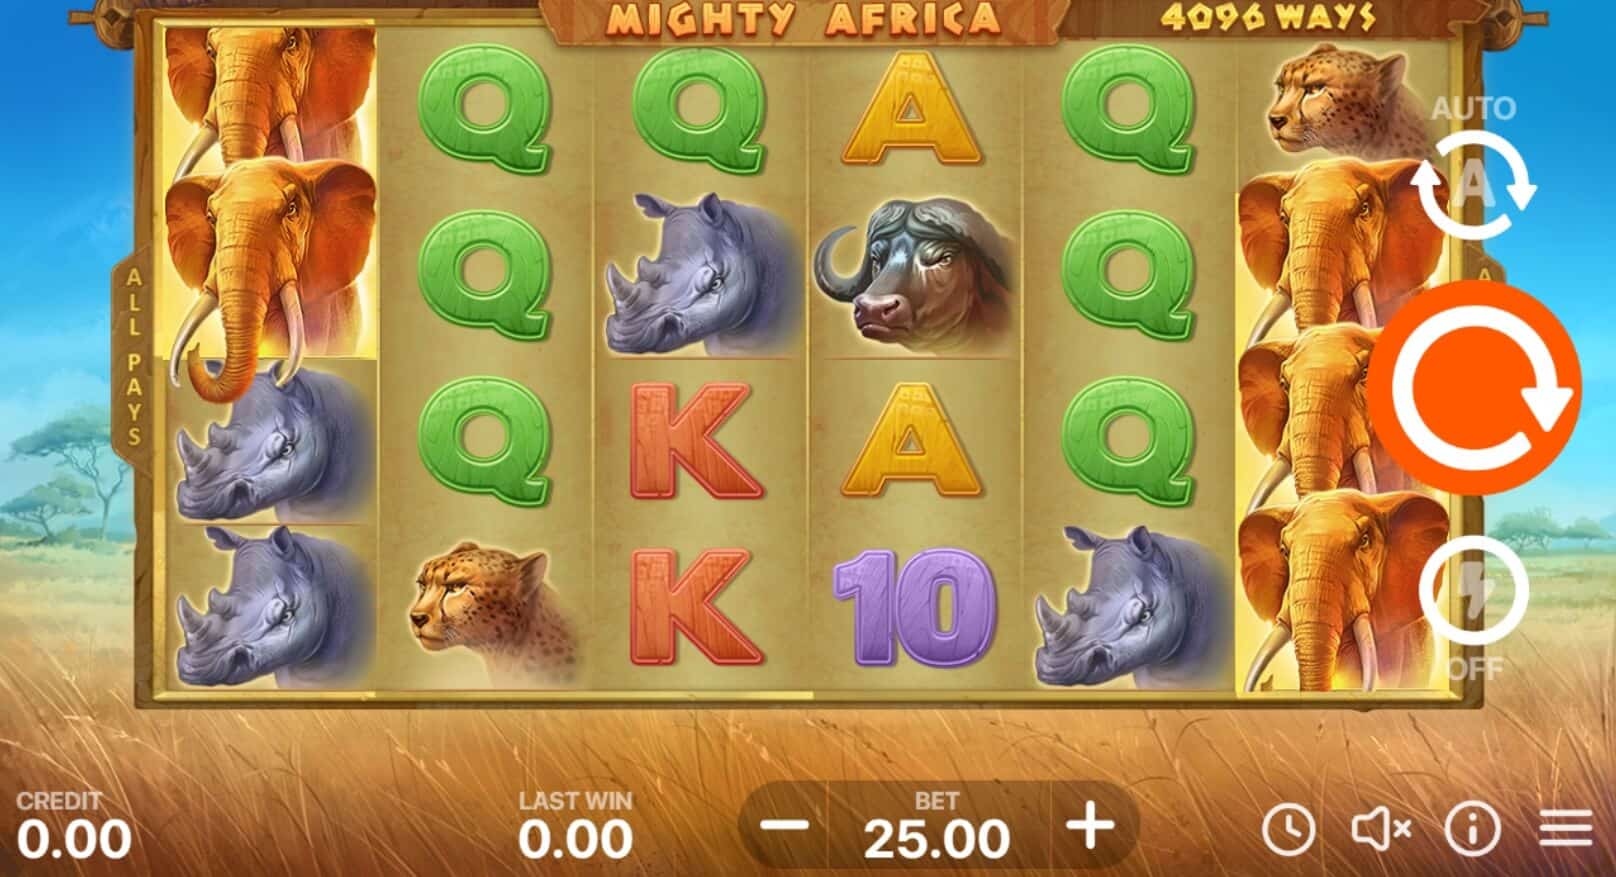 Mighty Africa 4096 Ways ค่าย booongo เว็บ สล็อต เว็บตรง SLOTXO จาก เกม สล็อต xo